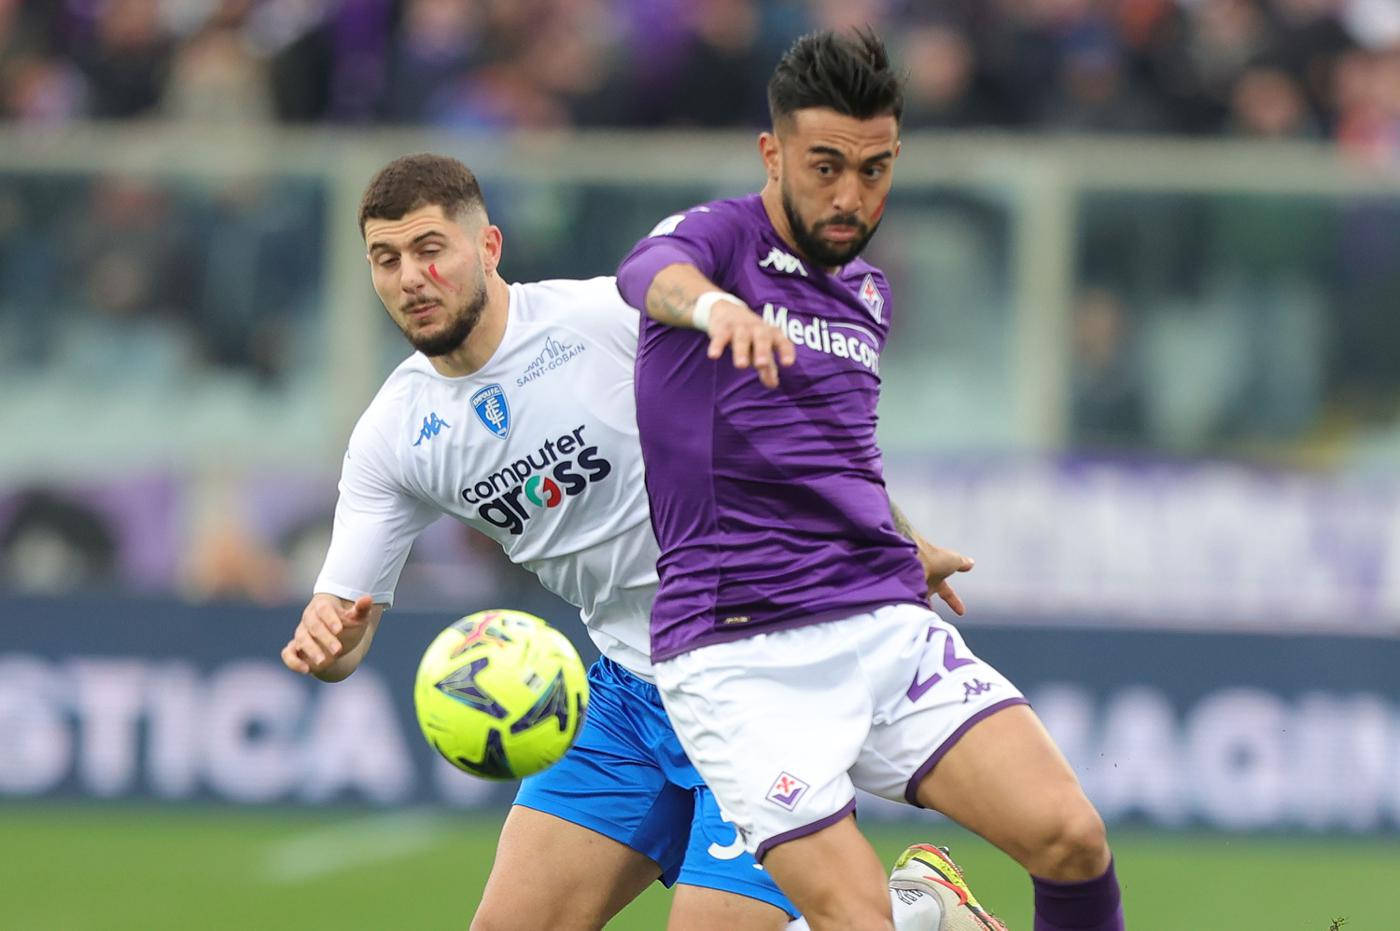 Fiorentina - Empoli - 1:1. Italian Championship, 23rd round. Match review, statistics